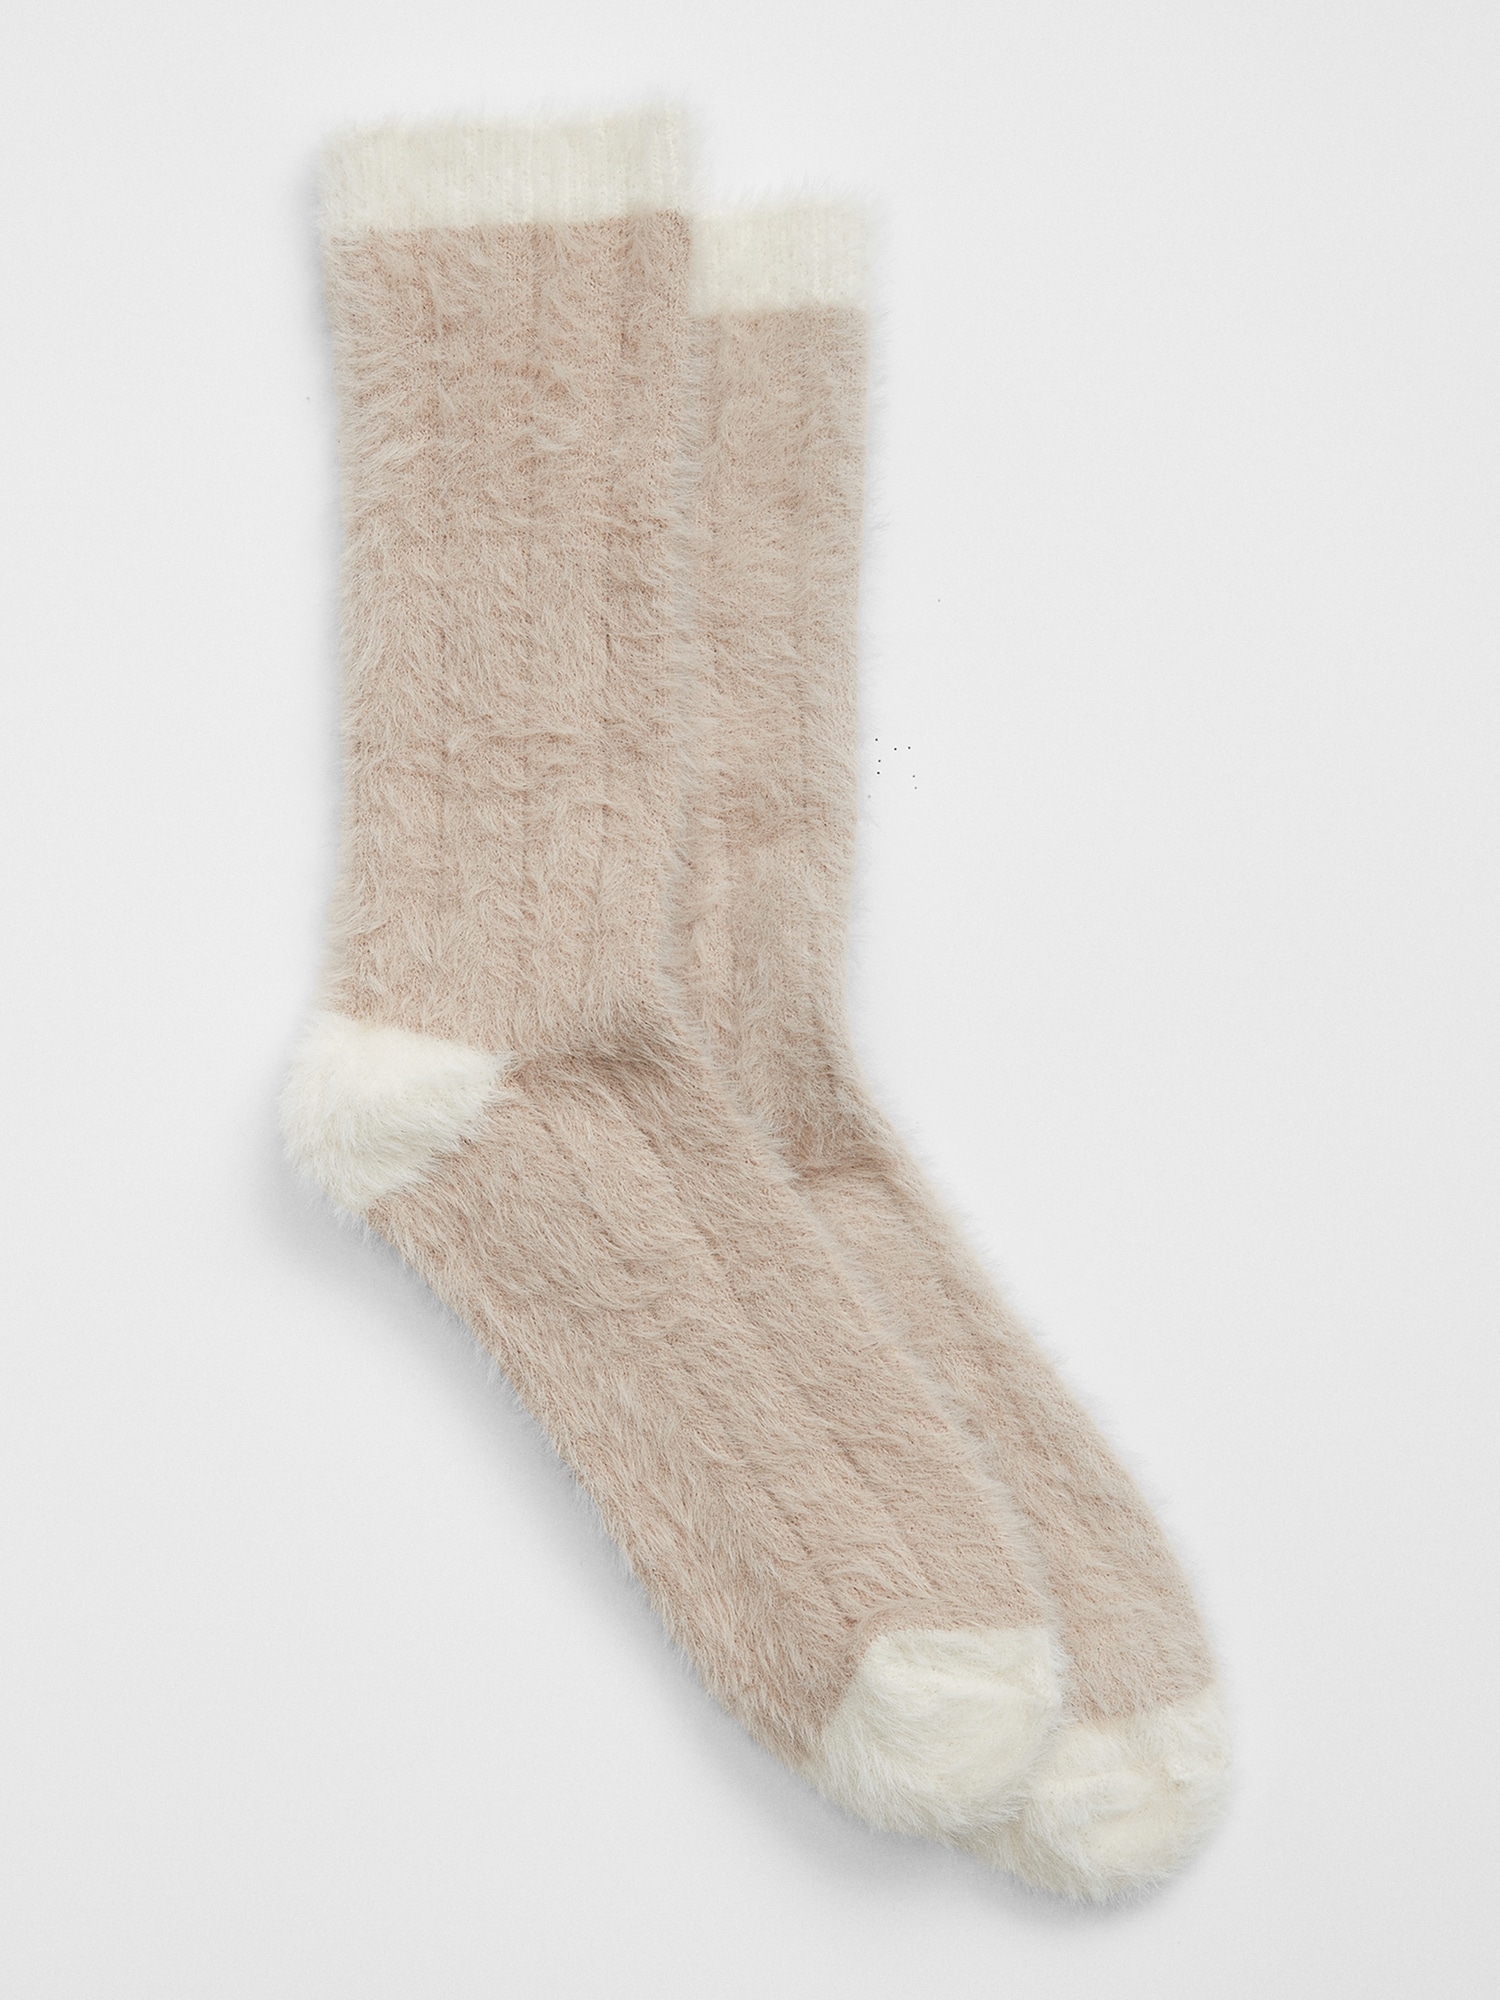 Ribbed Cozy Socks | Gap Factory